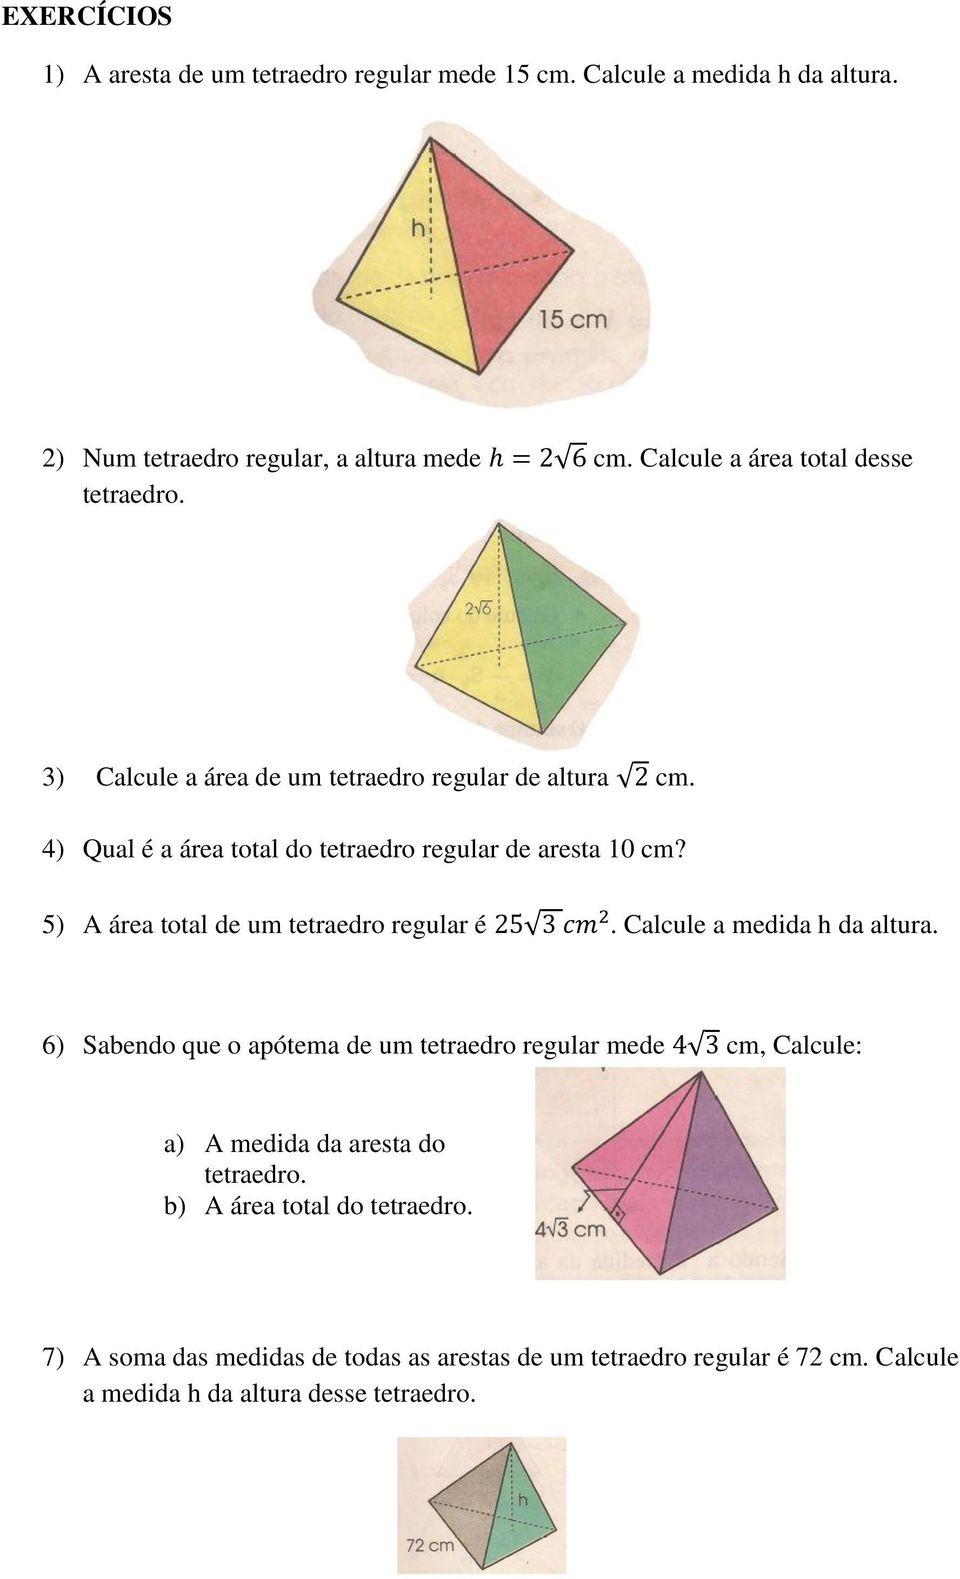 5) A área total de um tetraedro regular é. Calcule a medida h da altura.